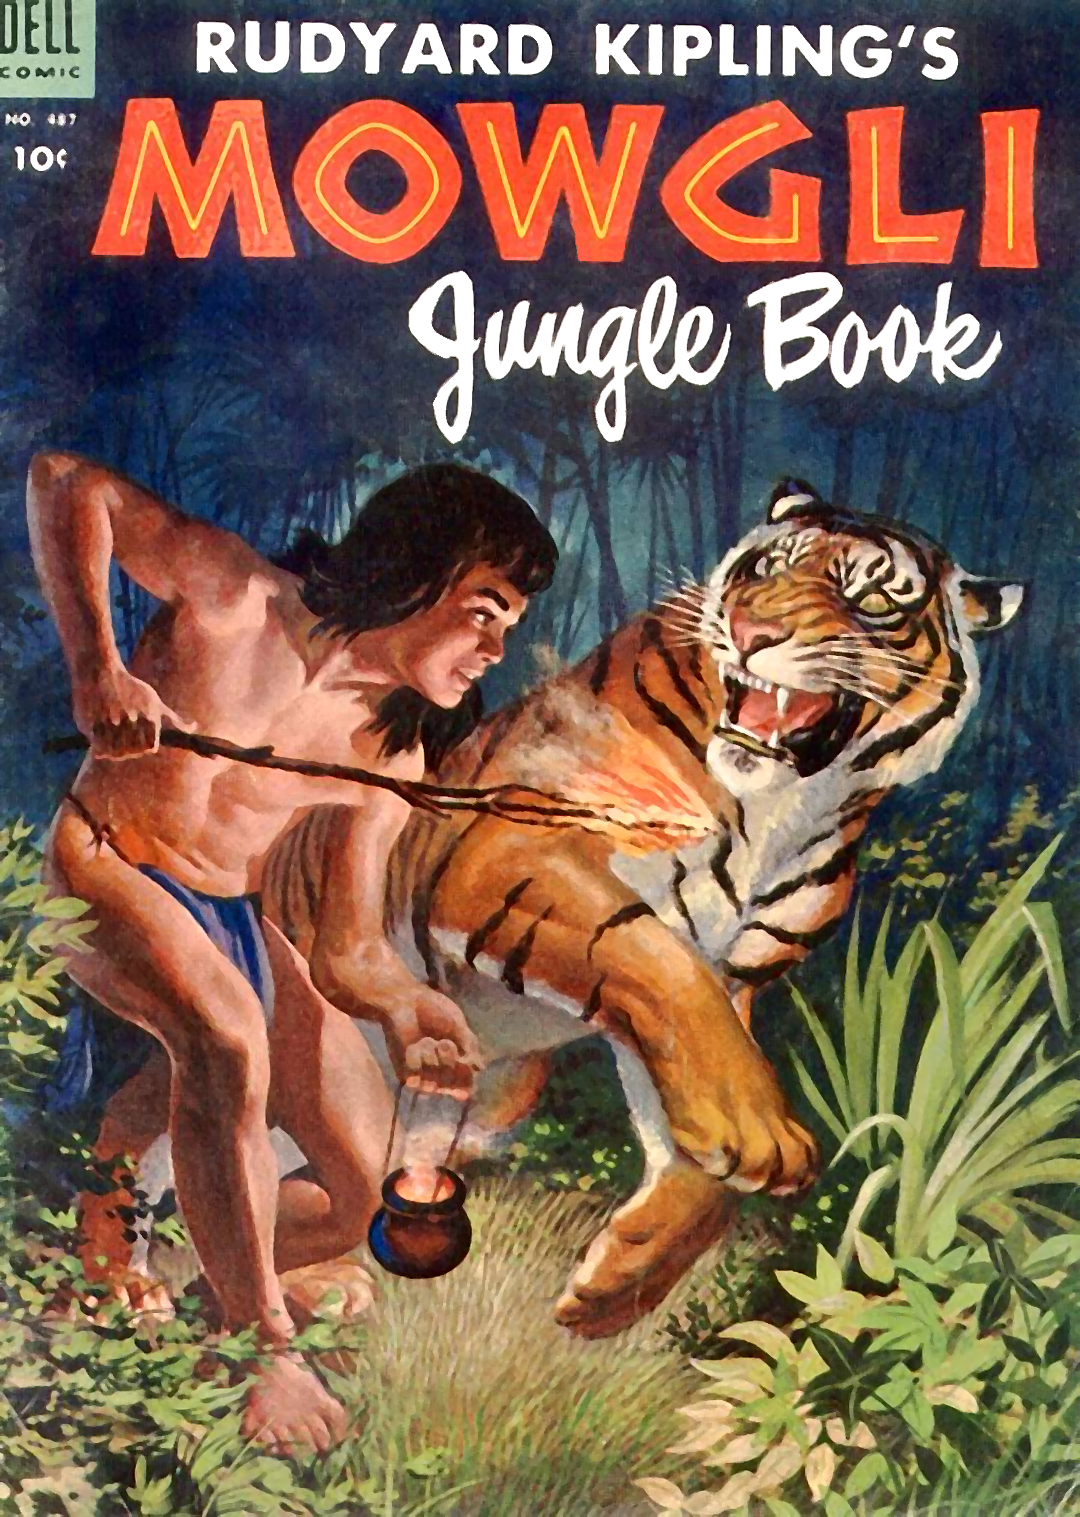 Rudyard Kipling's Mowgli: Jungle Book #1 cover